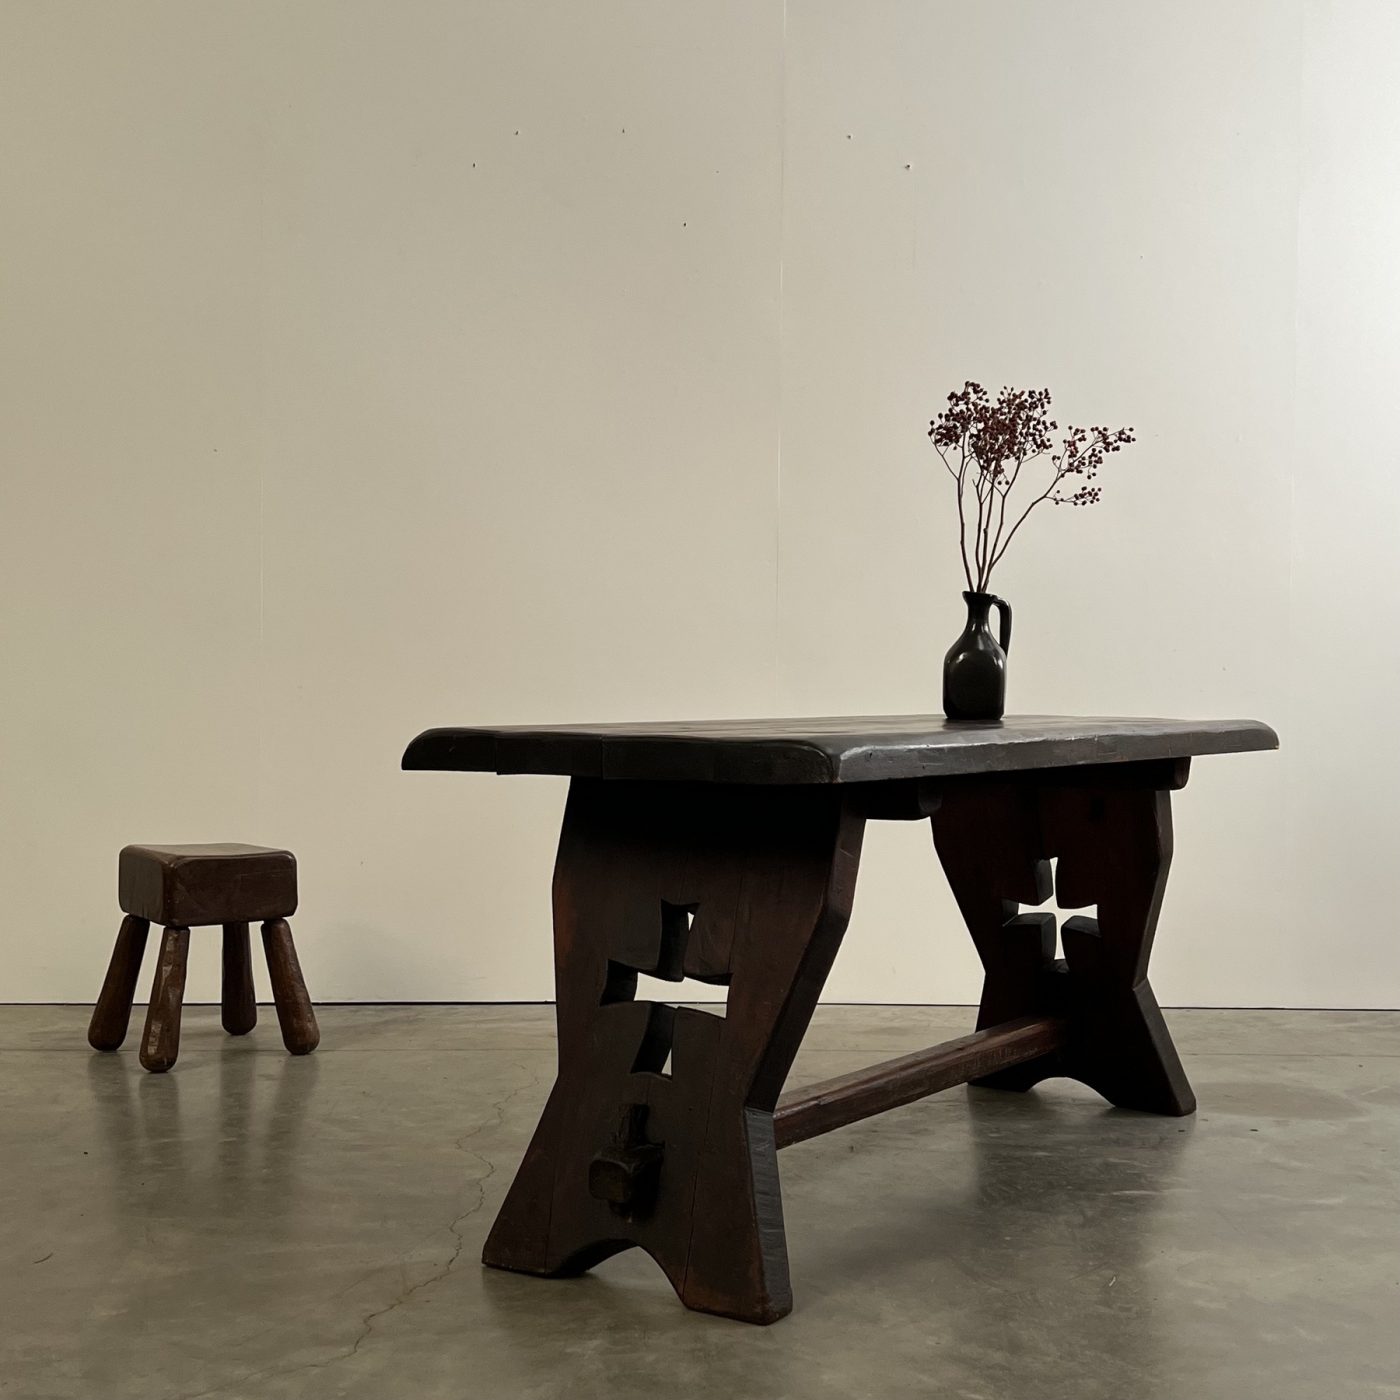 objet-vagabond-massive-table0005